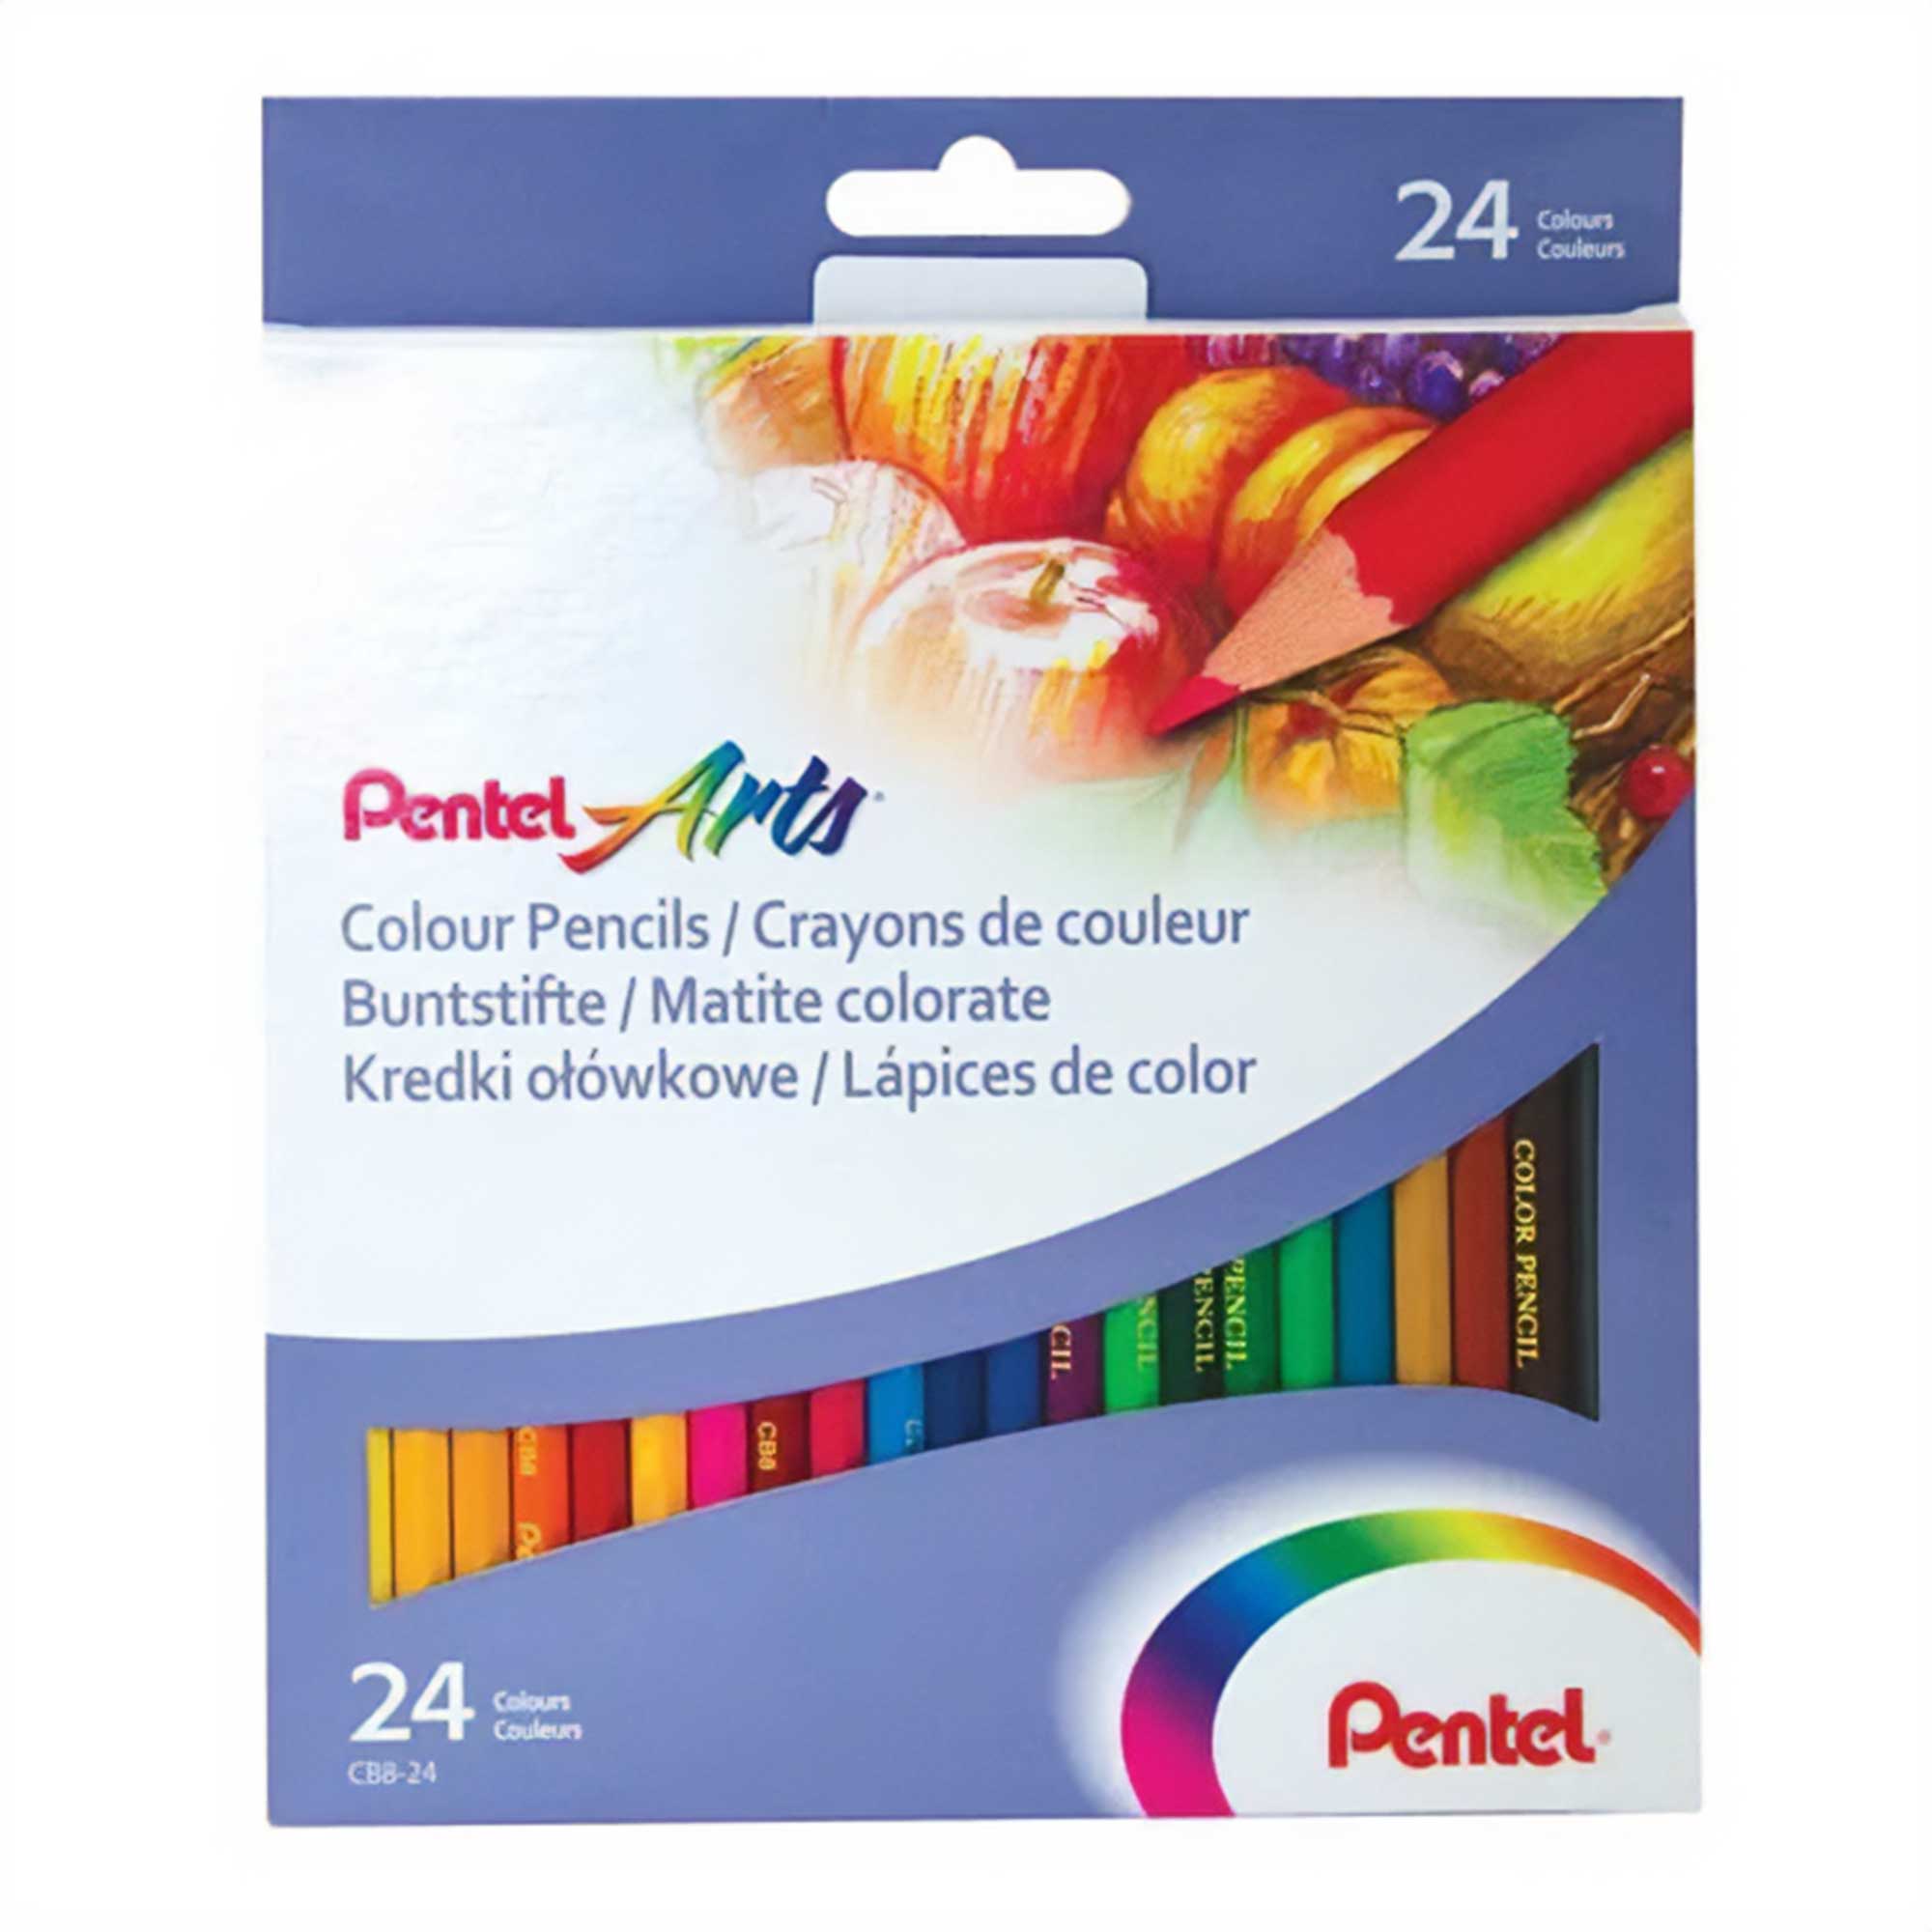 Pentel Arts Colour Pencils - Set of 24